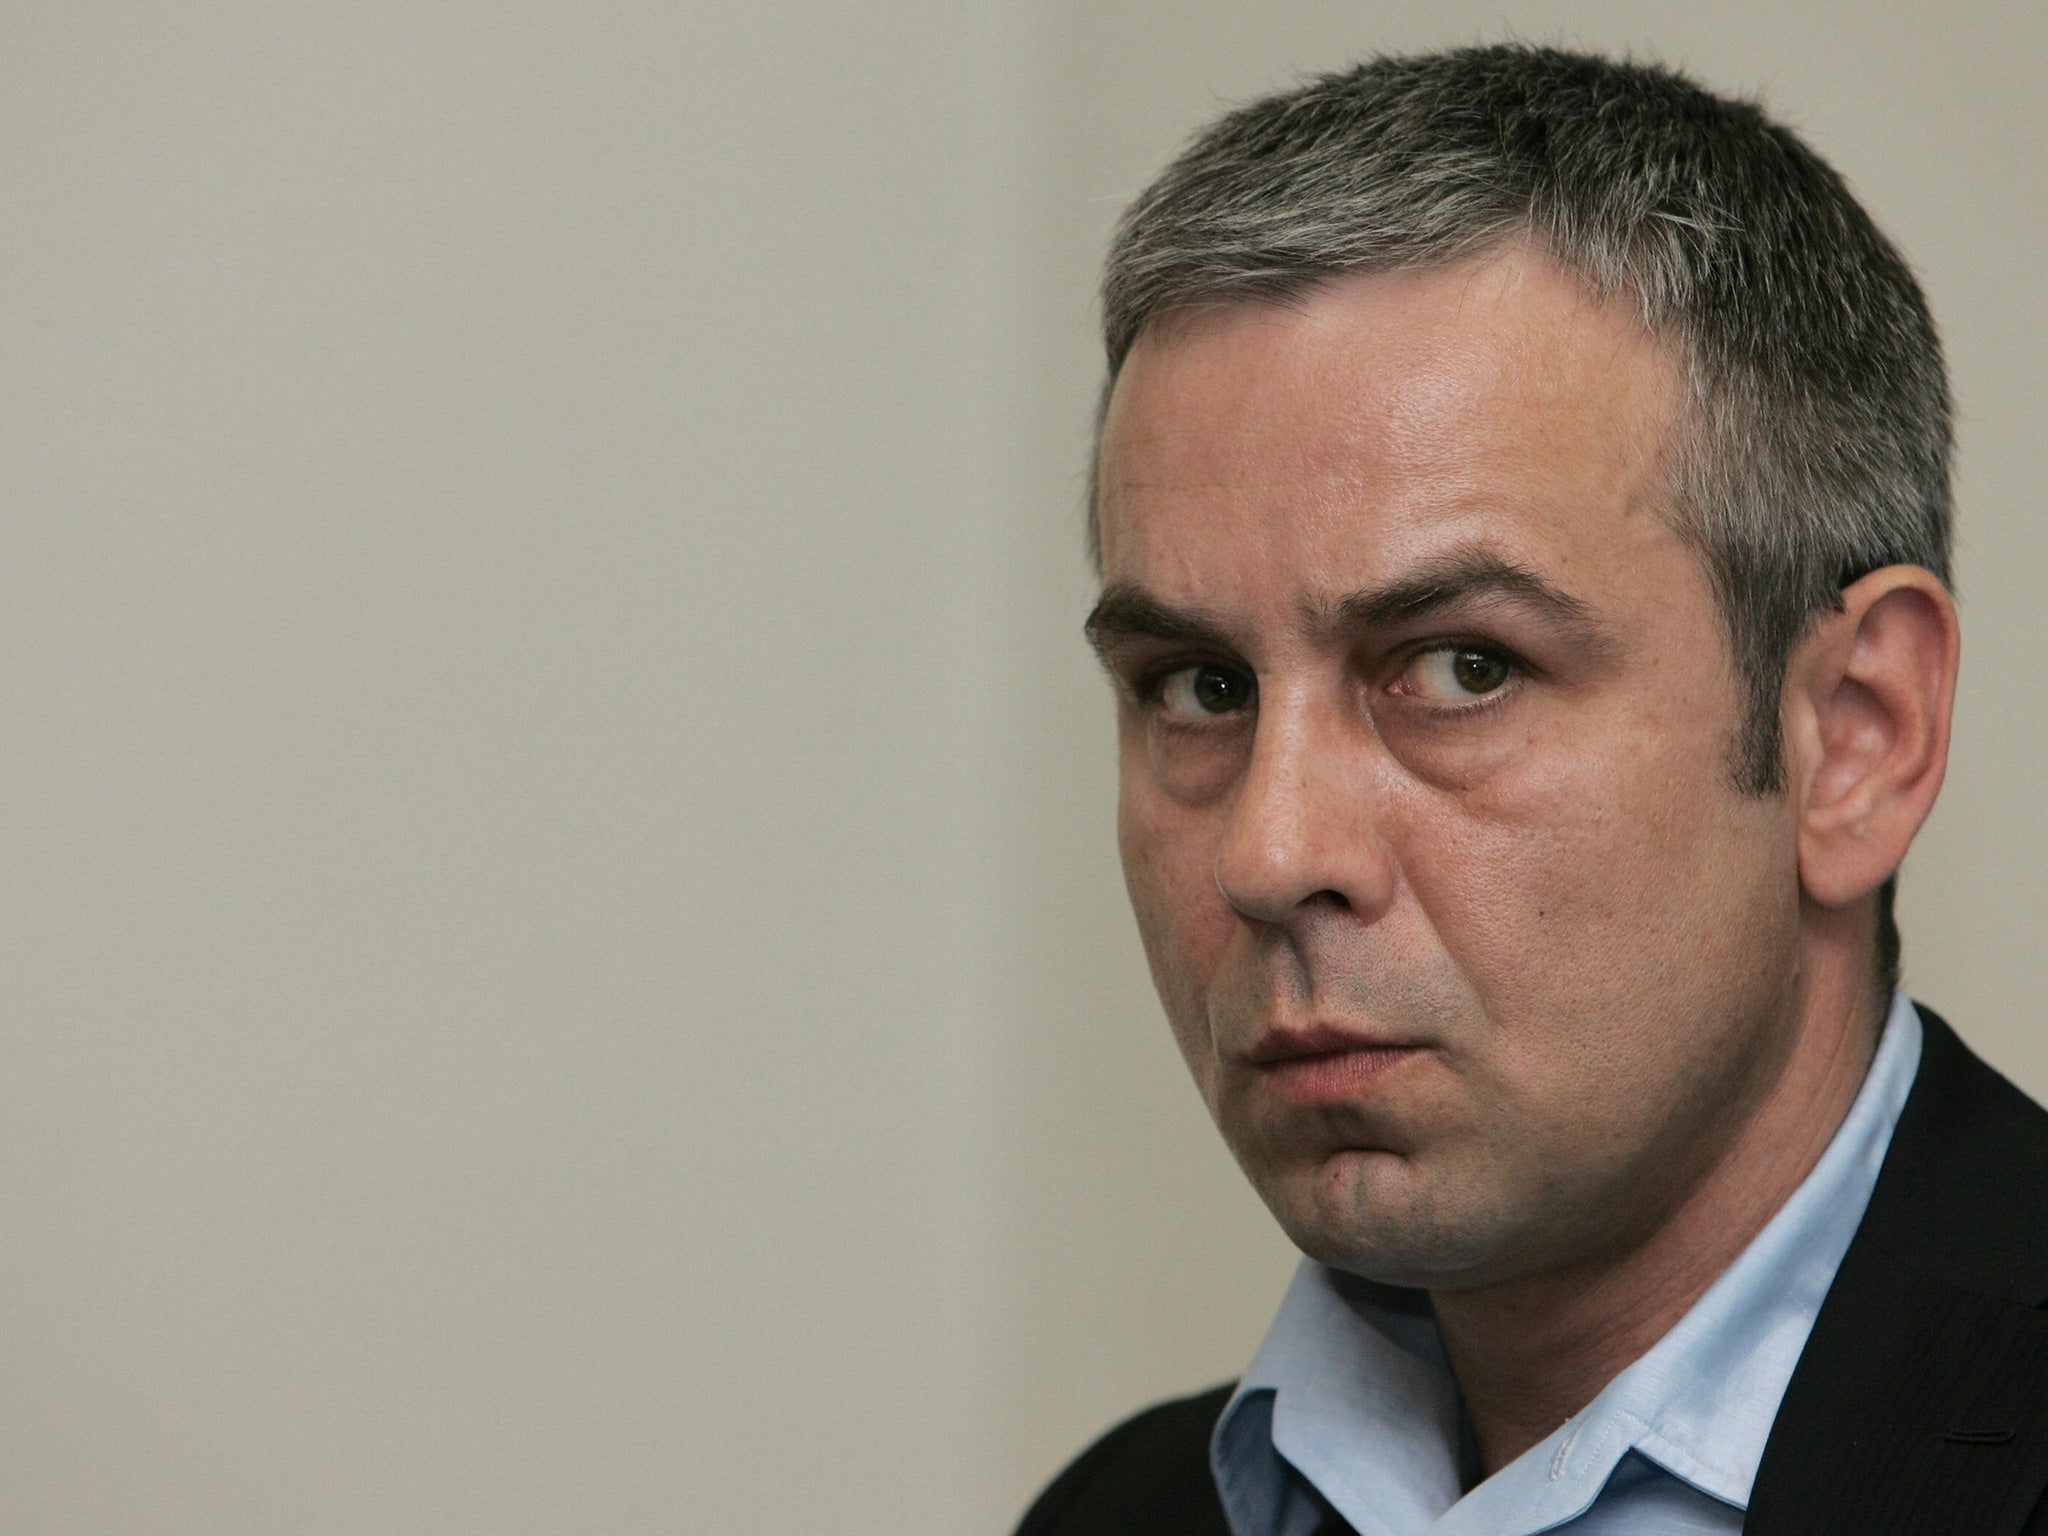 Dmitry Kovtun, one of the two men accused of murdering the former Russian spy Alexander Litvinenko